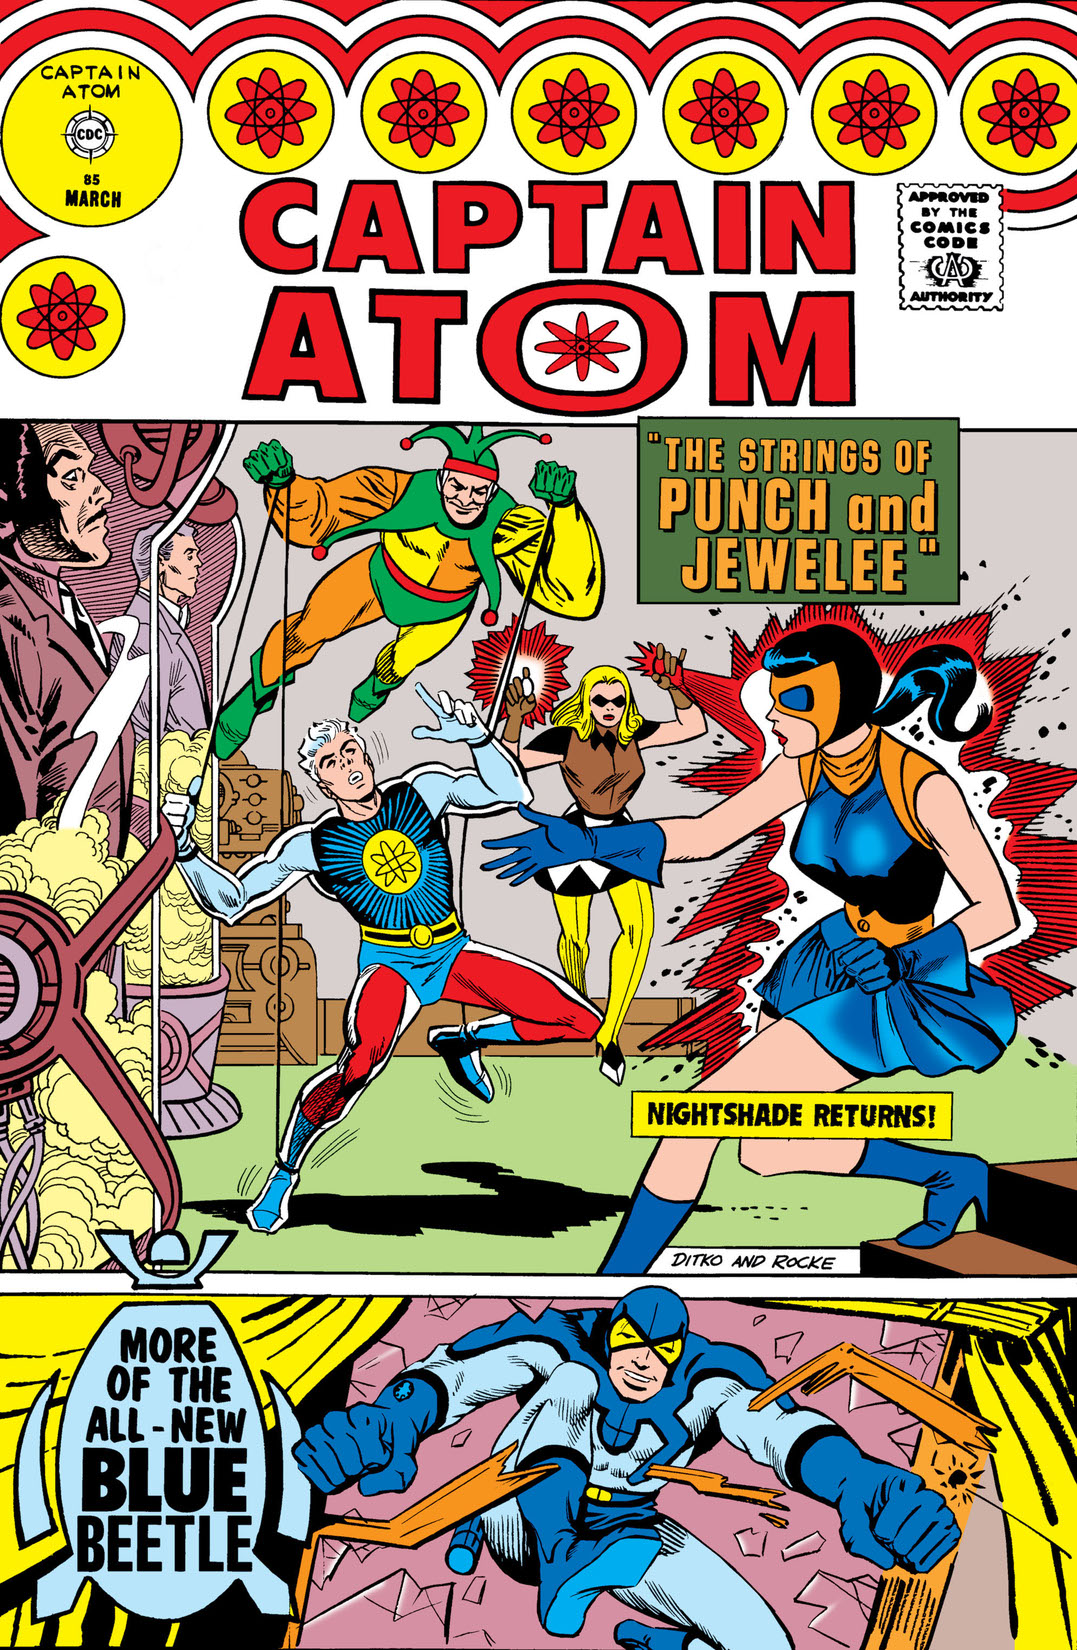 Captain Atom (1965-) #85 preview images